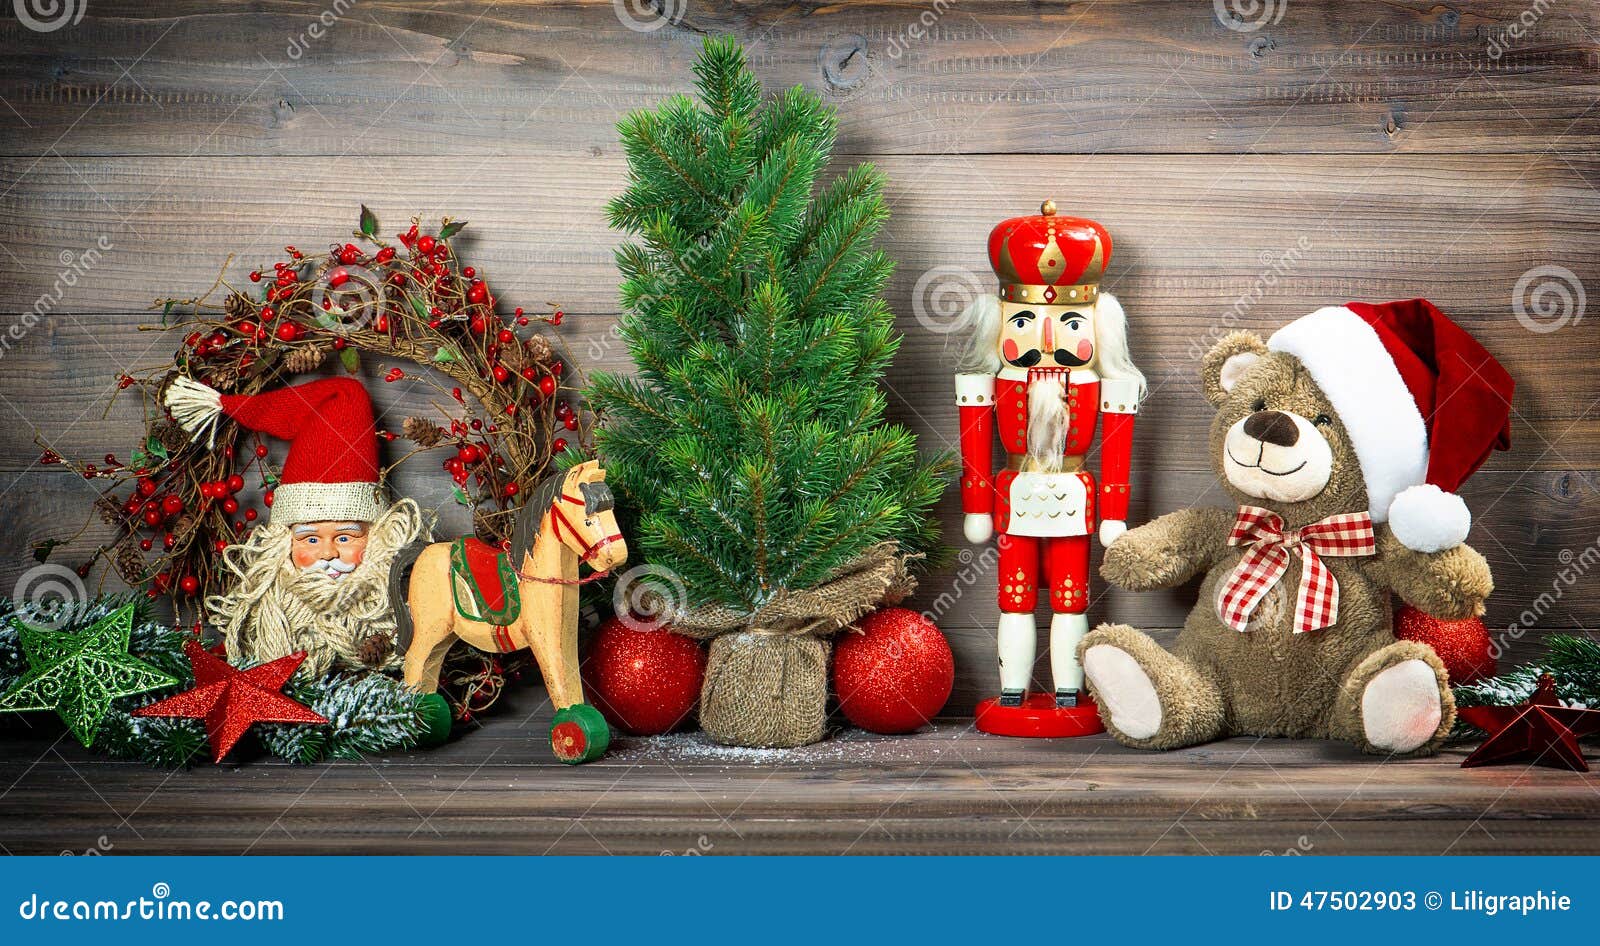 christmas decoration with antique toys teddy bear